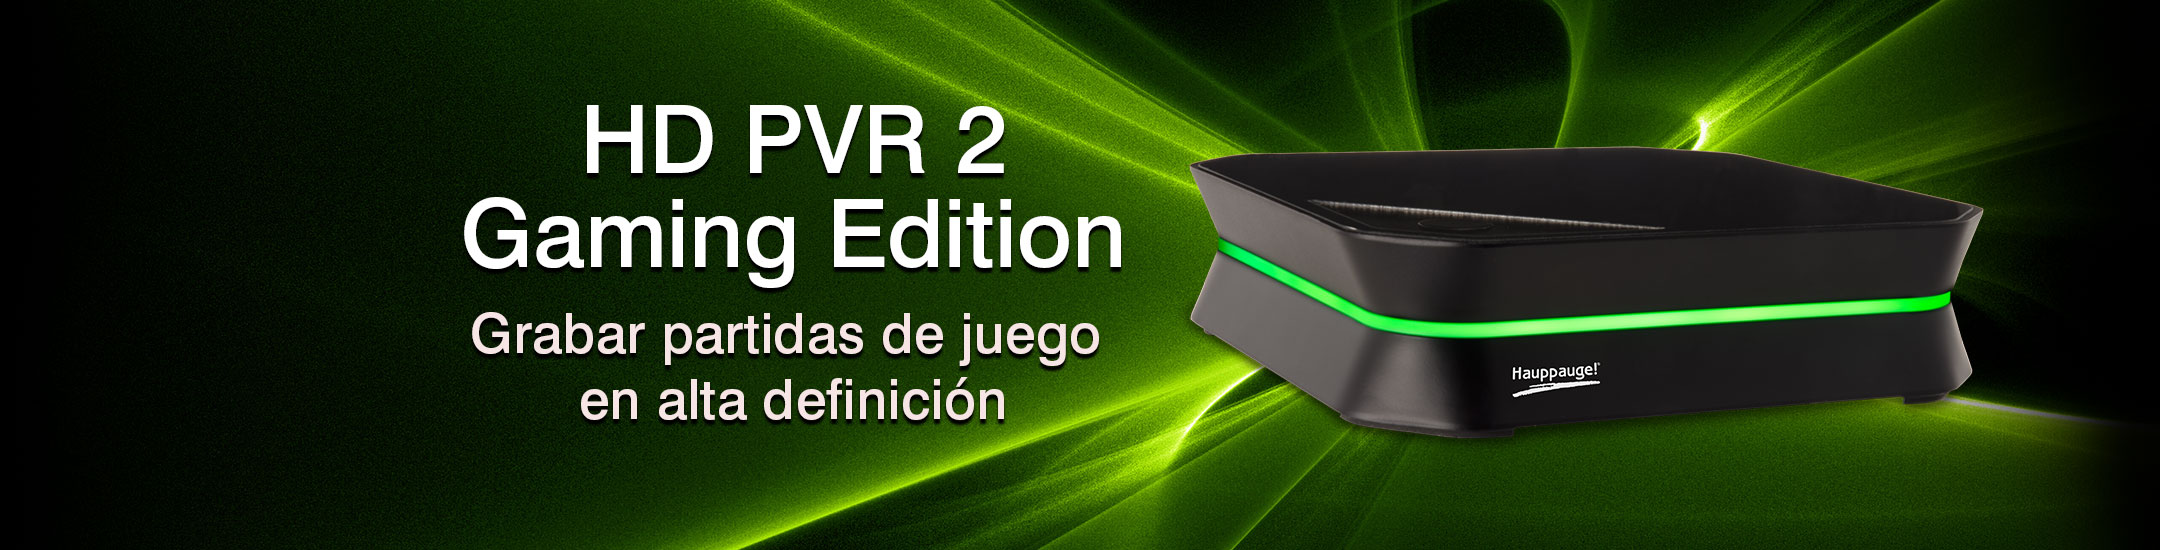 HD PVR 2 Gaming Edition